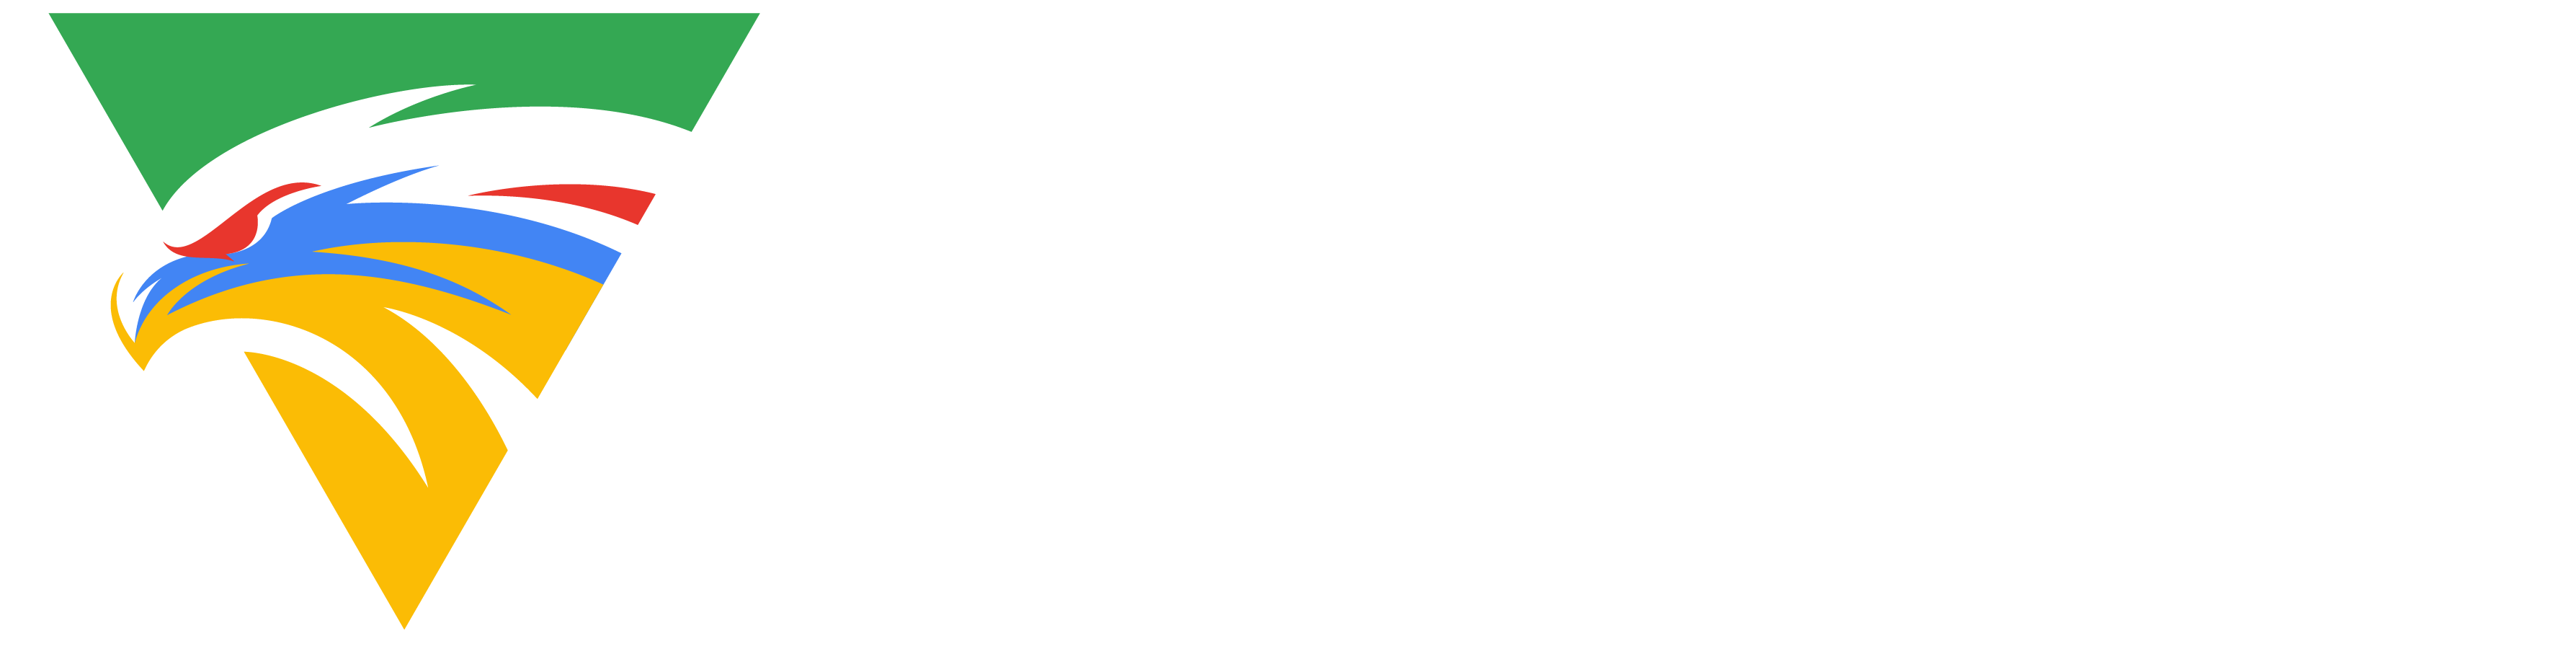 American Design Network 